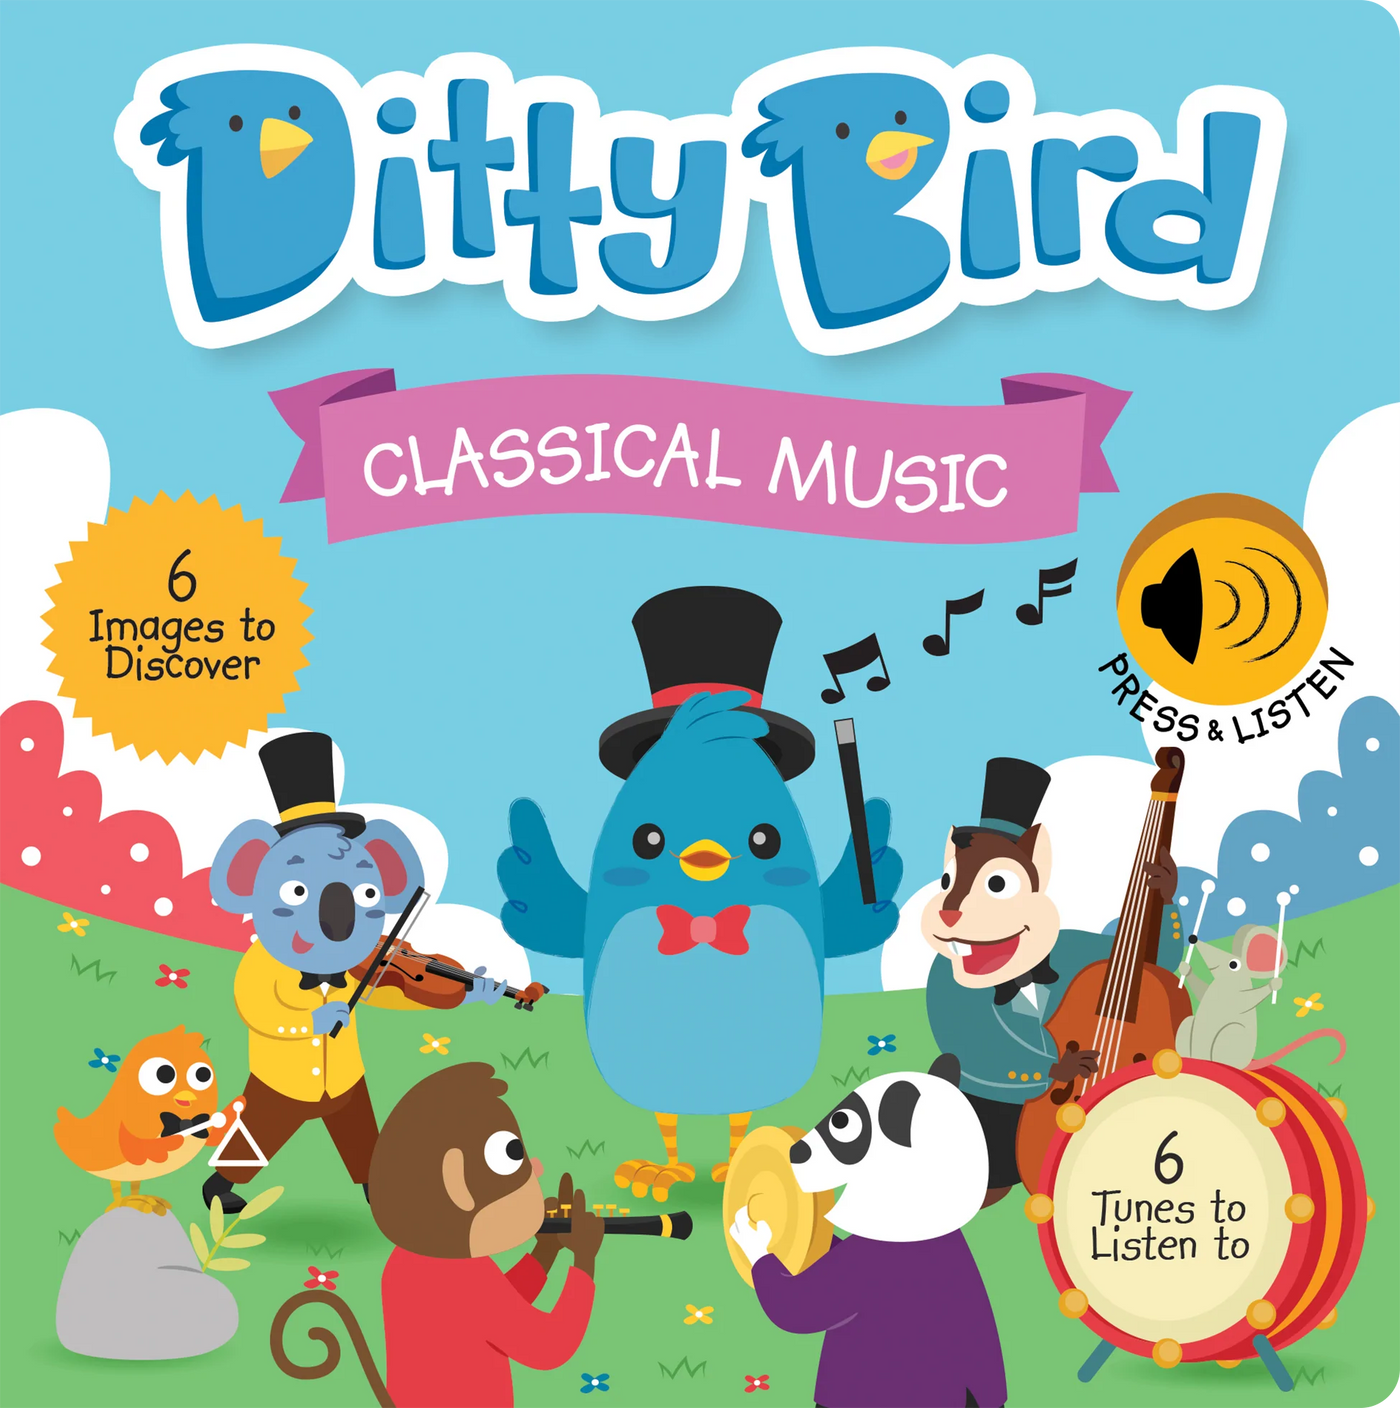 Ditty Bird- Classical Music